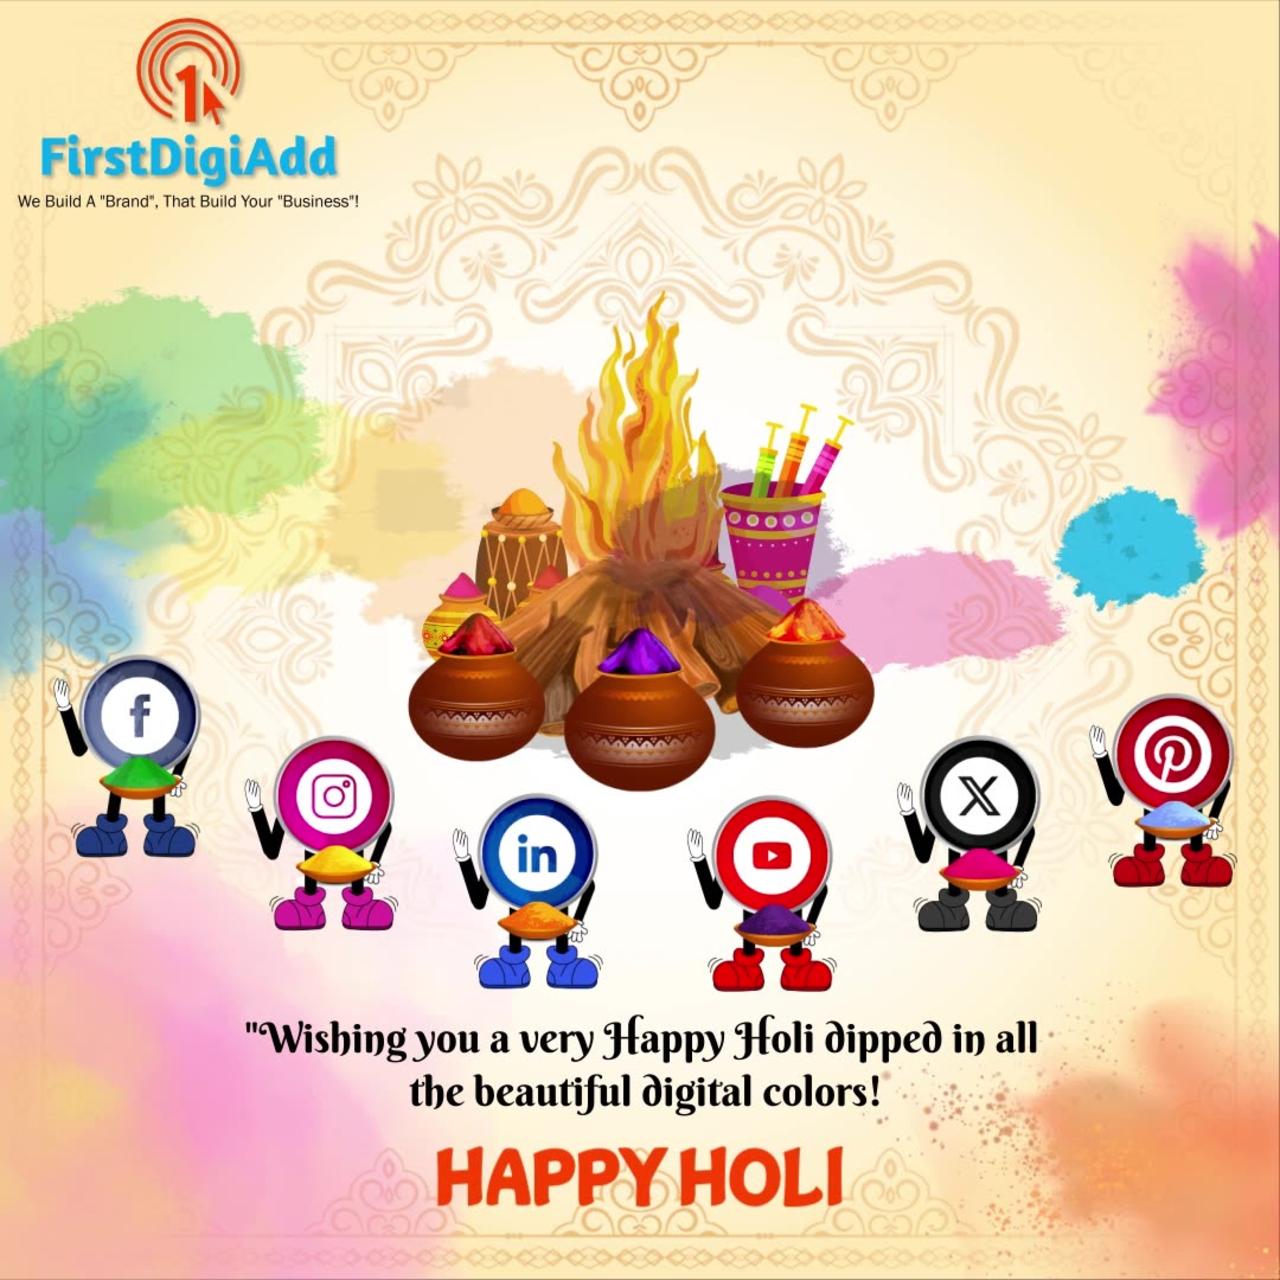 Wishing You a Colorful and Joyous Holi